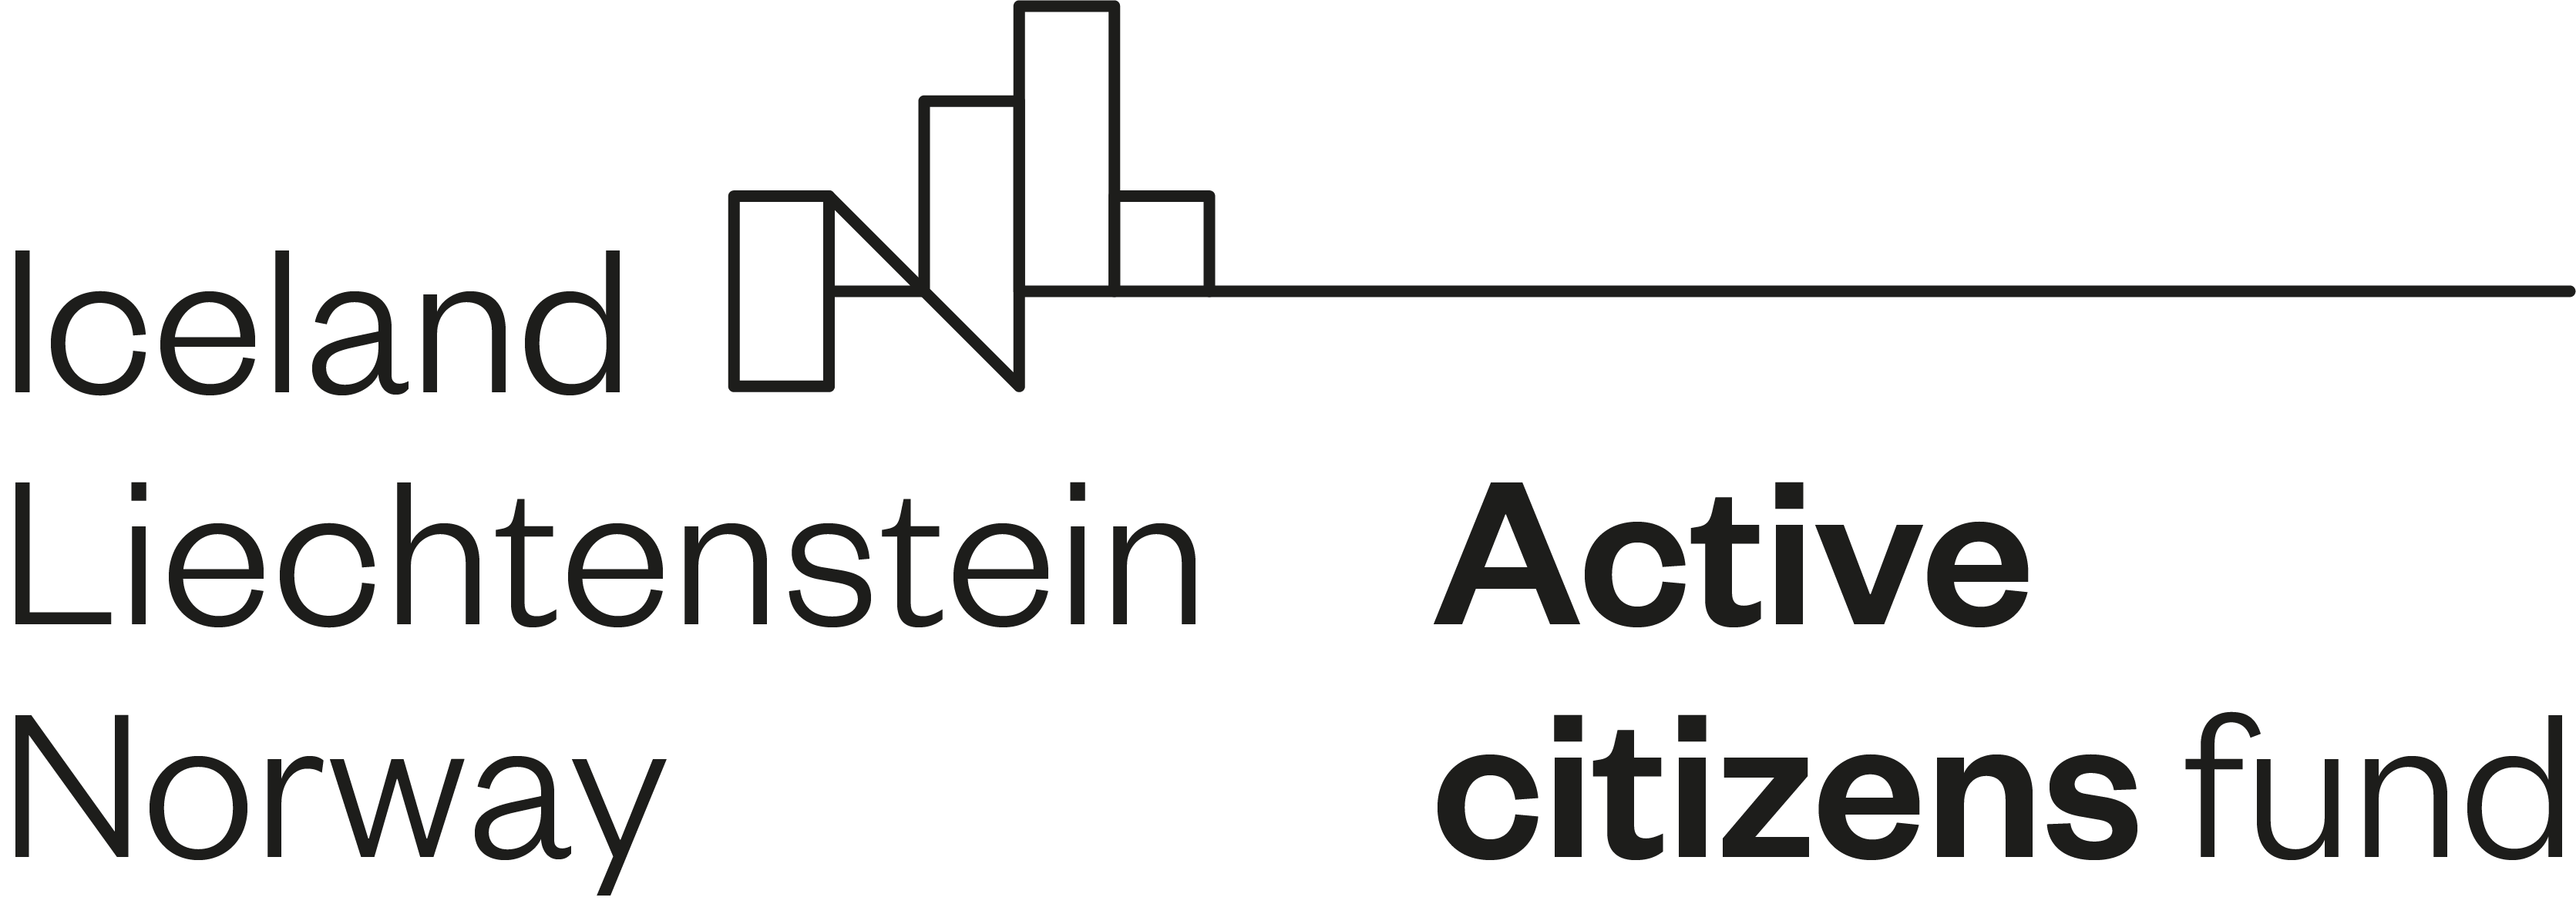 Active citizens fund4x